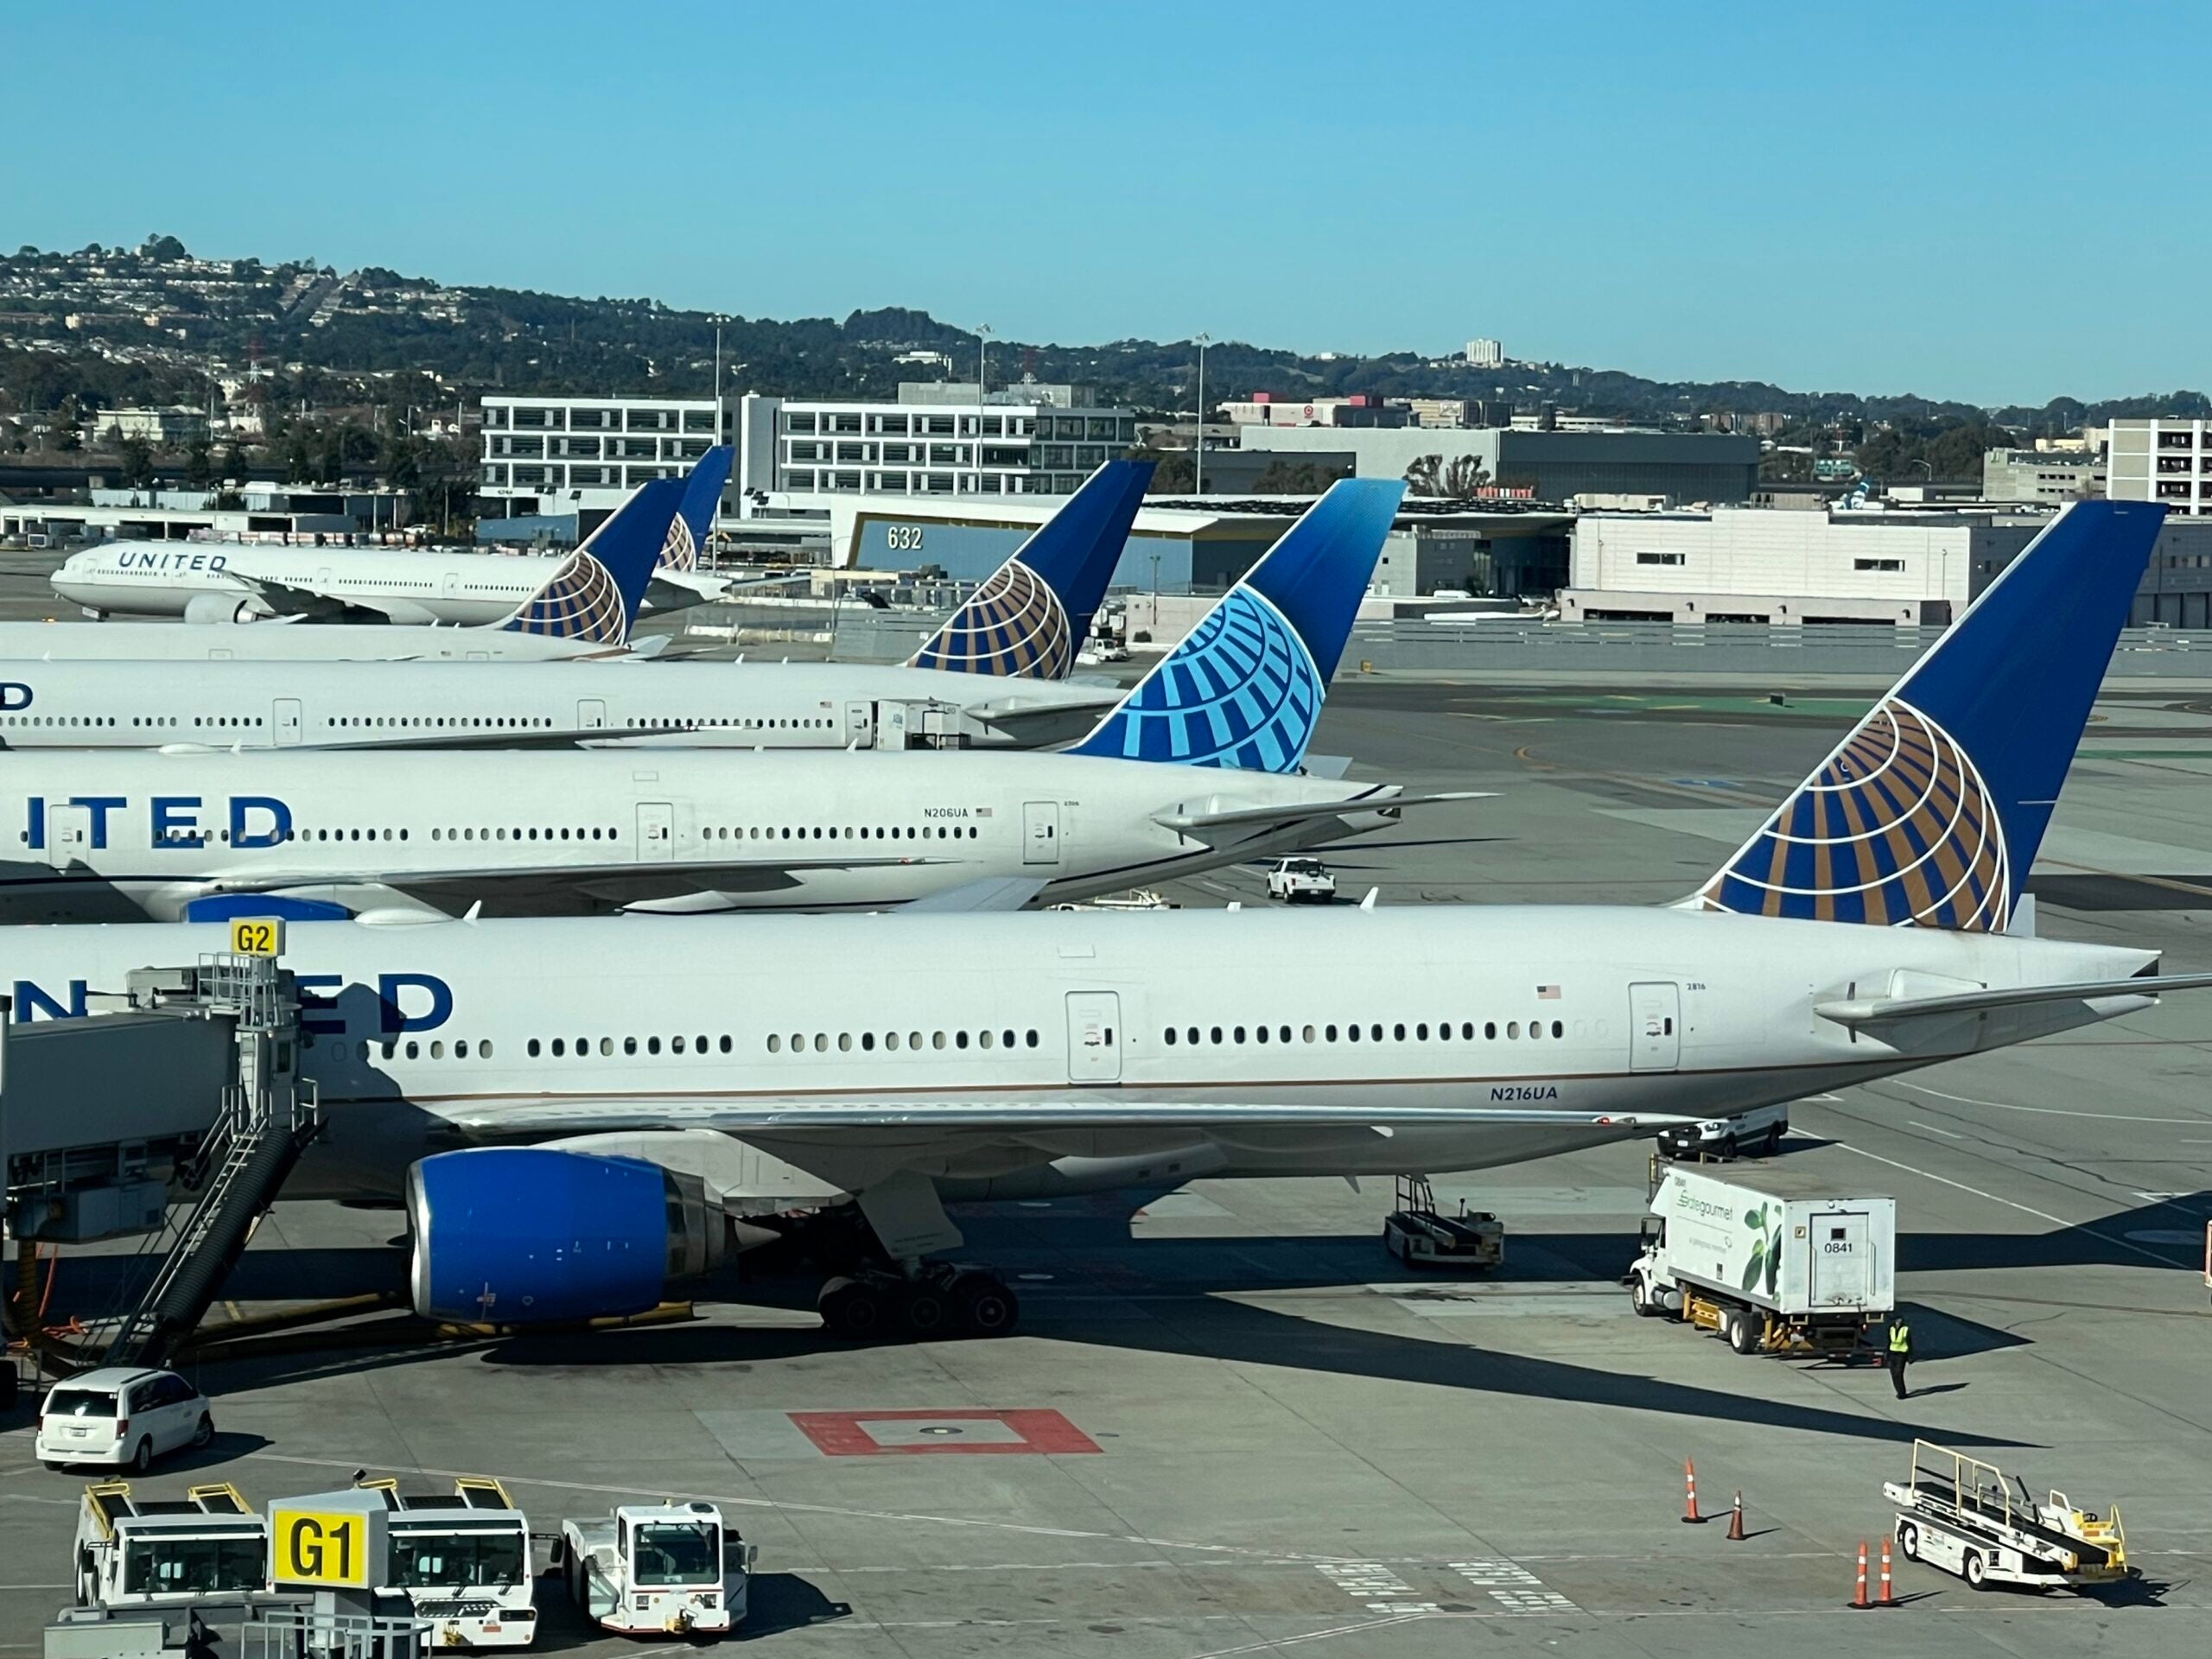 United Boeing 777s